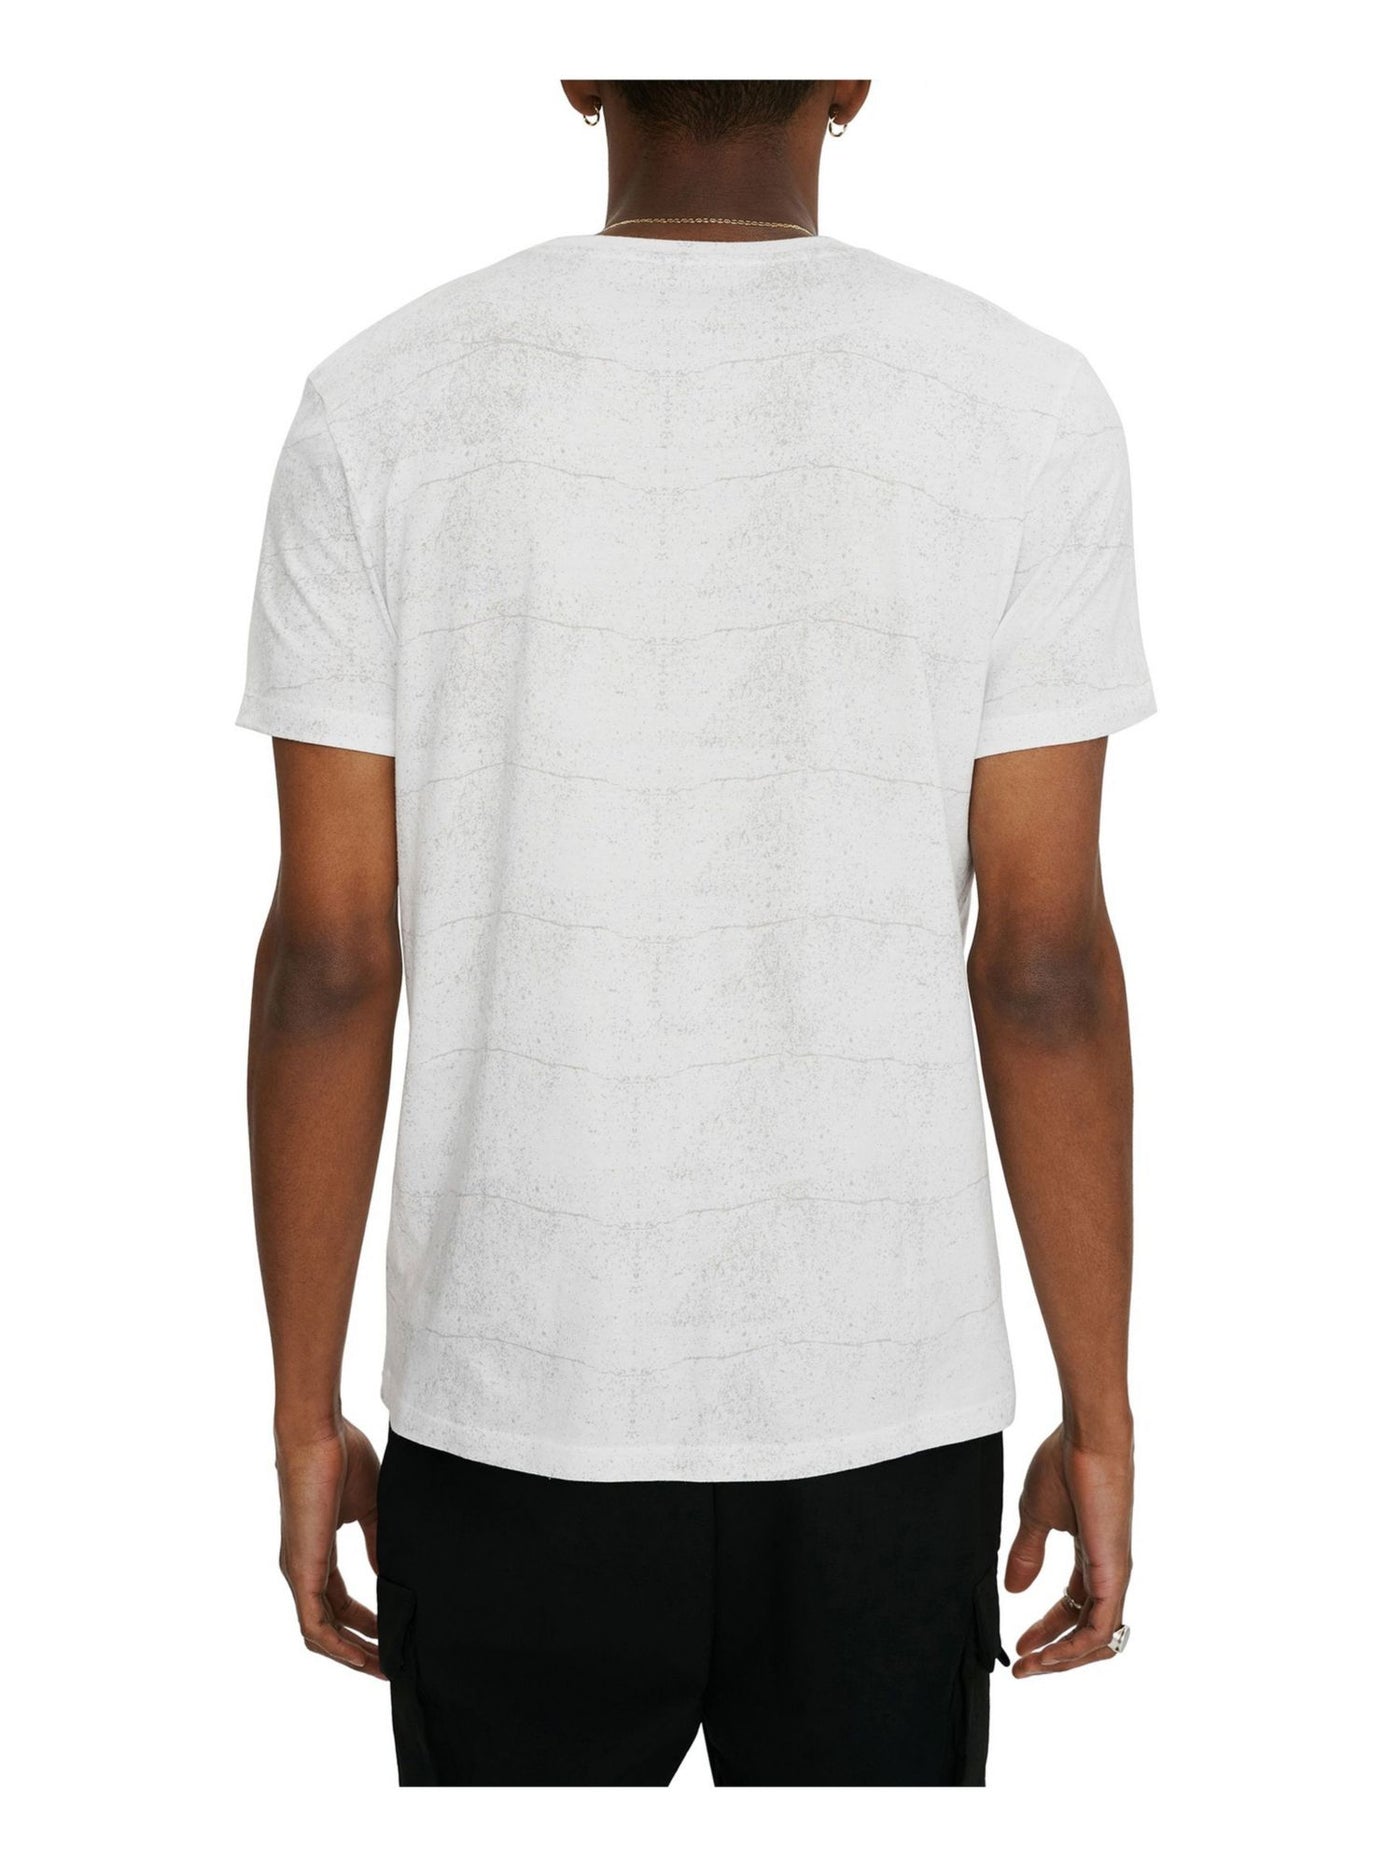 HYBRID APPAREL Mens White Graphic Short Sleeve T-Shirt XL